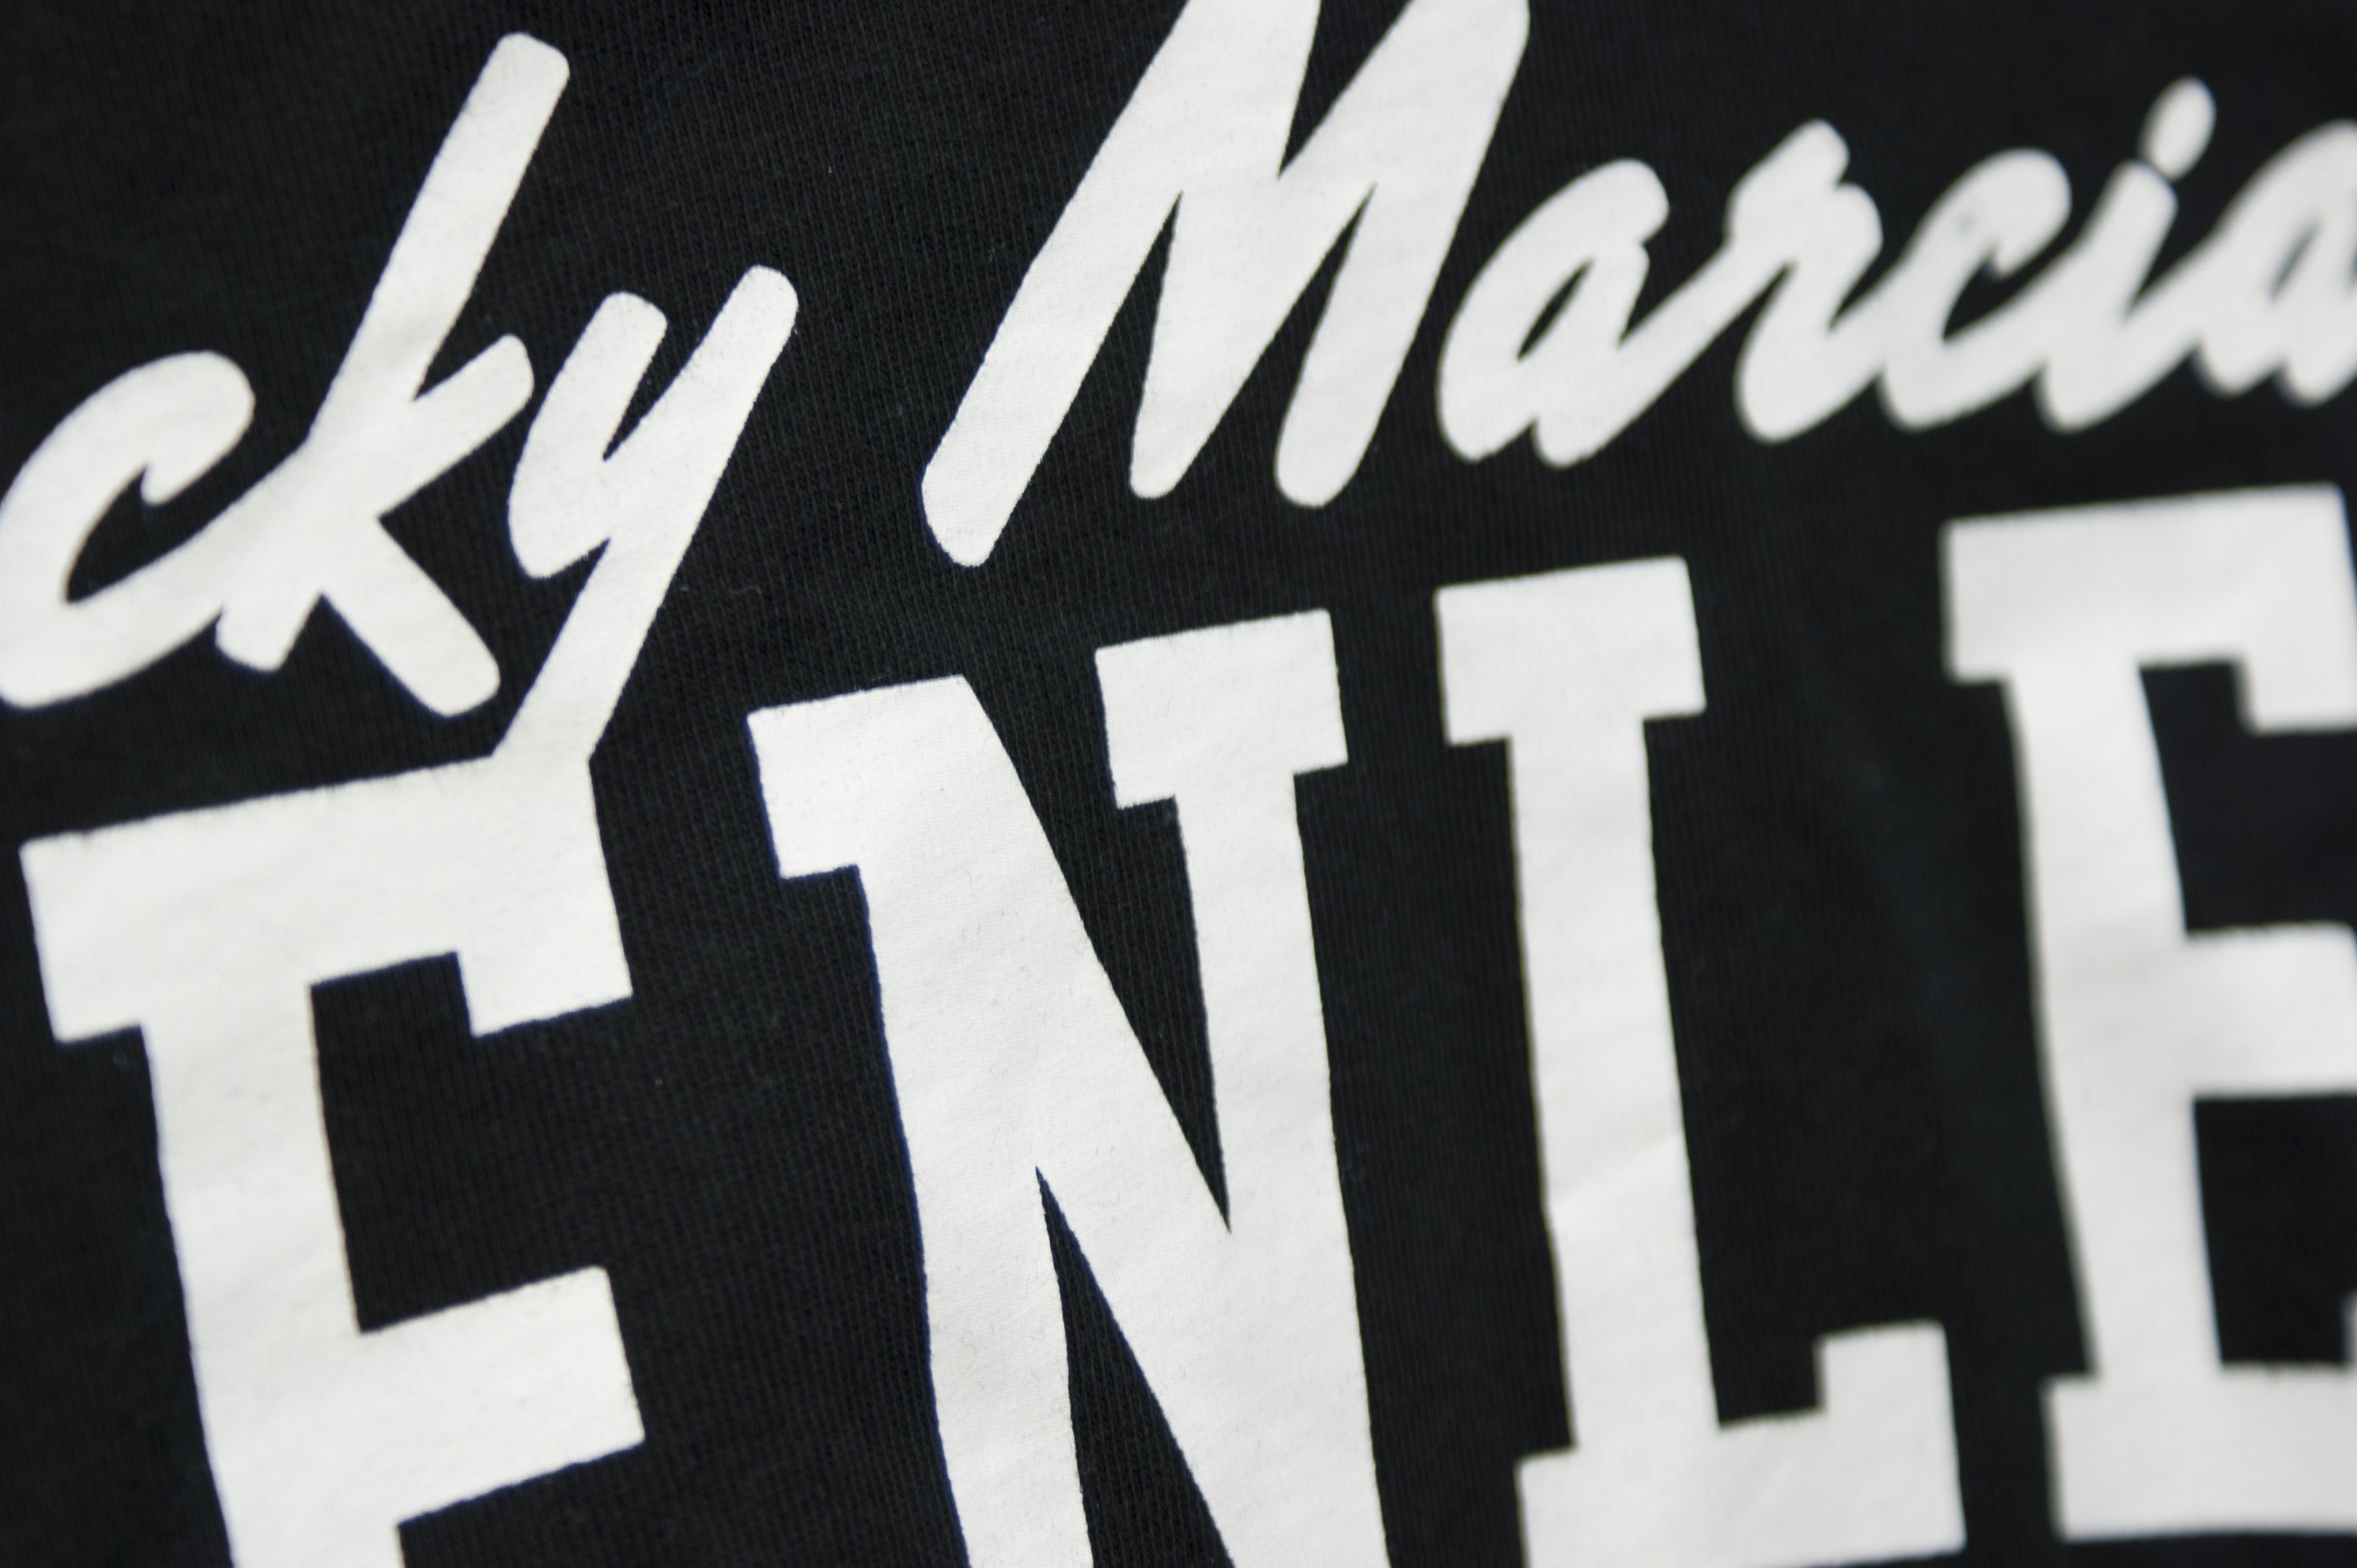 Herren Shirts Benlee Rocky Marciano T-Shirt EDWARDS